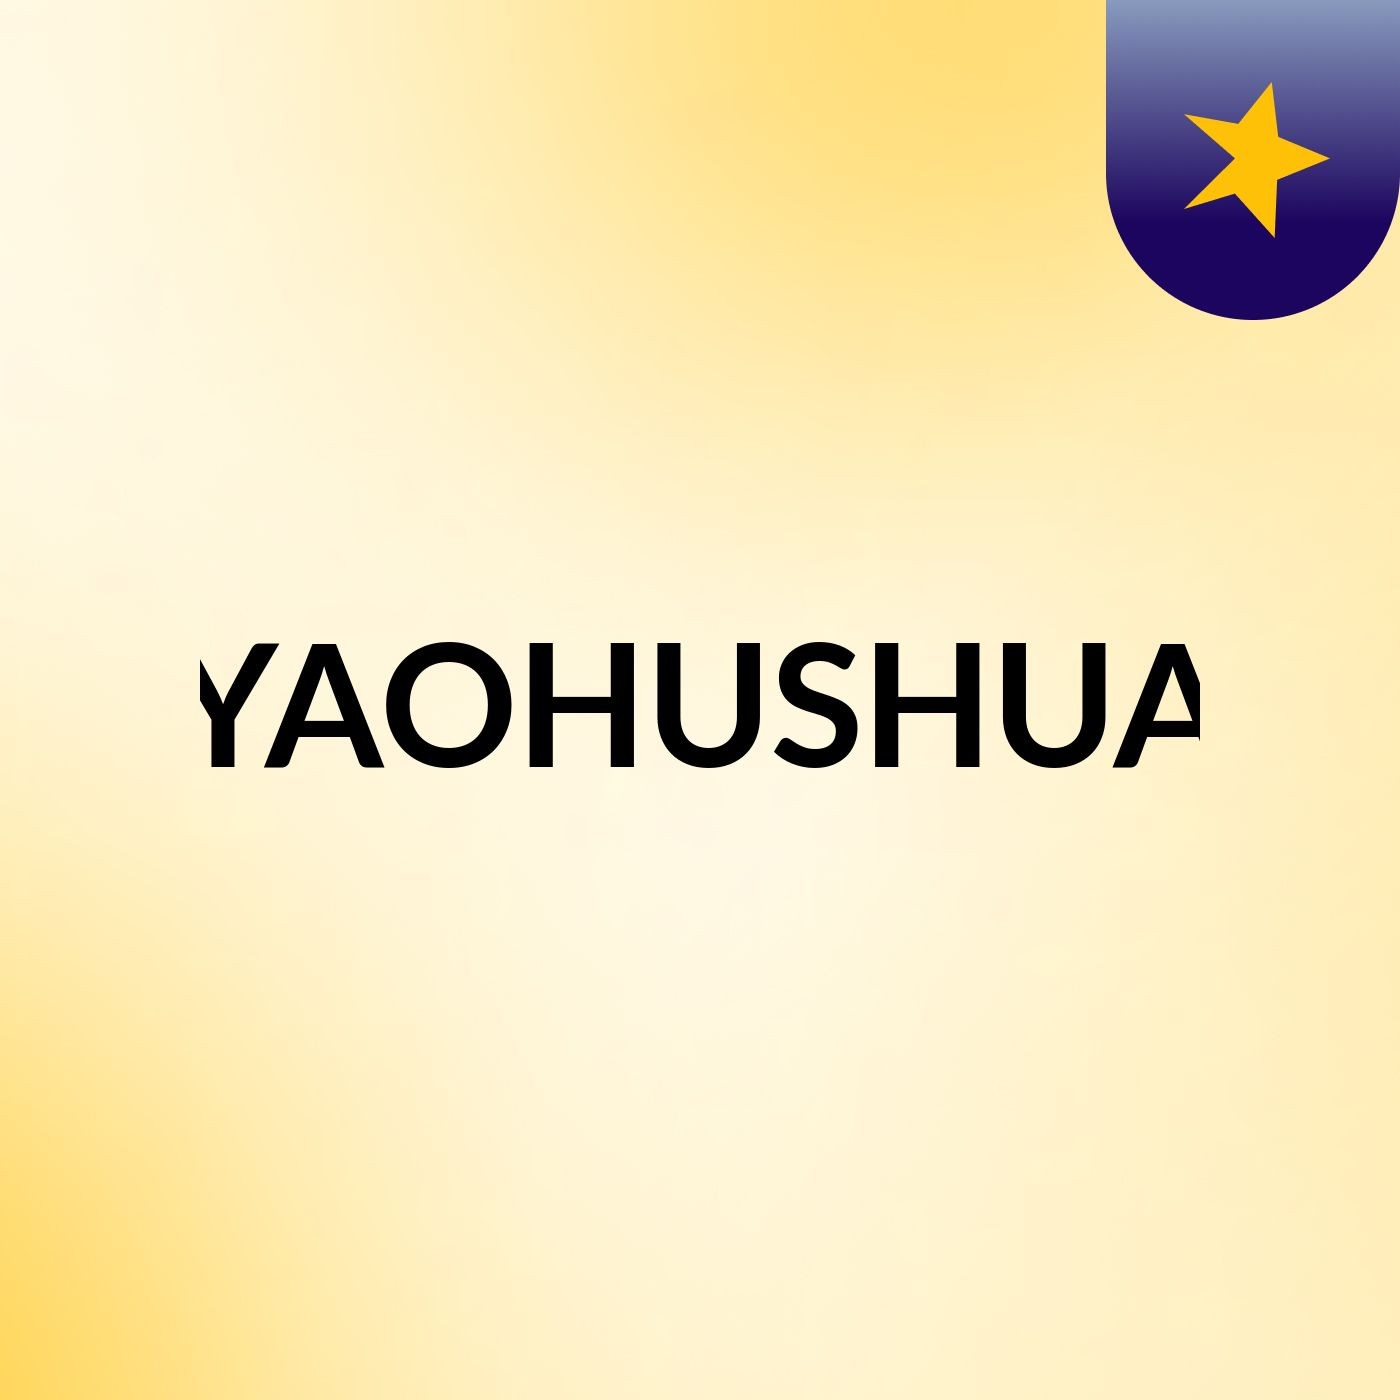 YAOHUSHUA